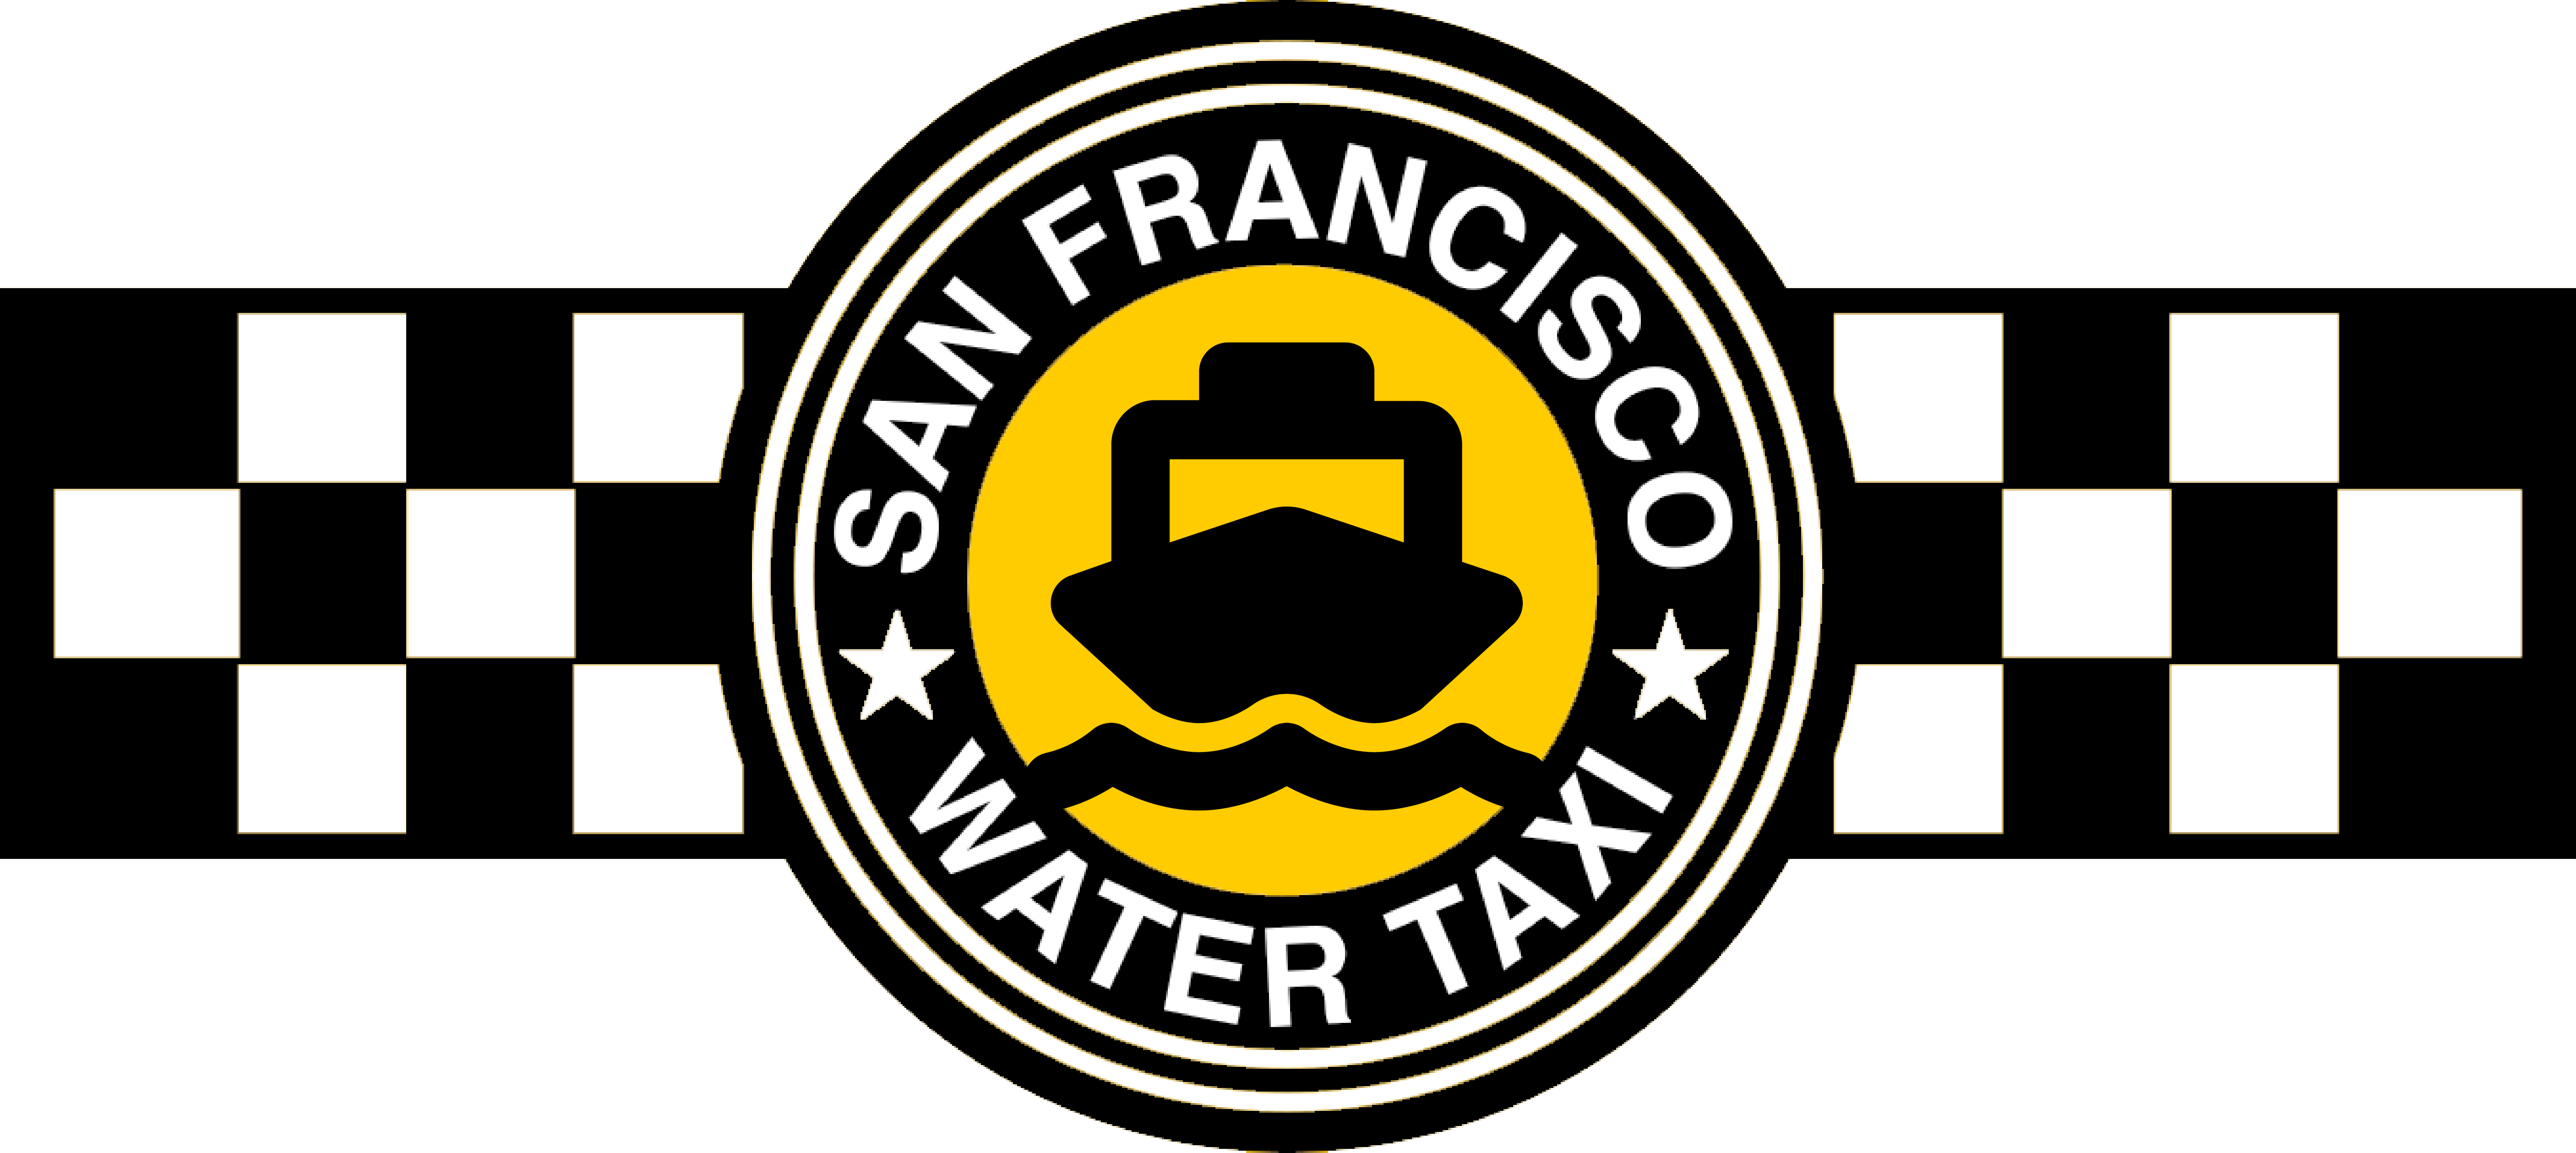 San Francisco Water Taxi